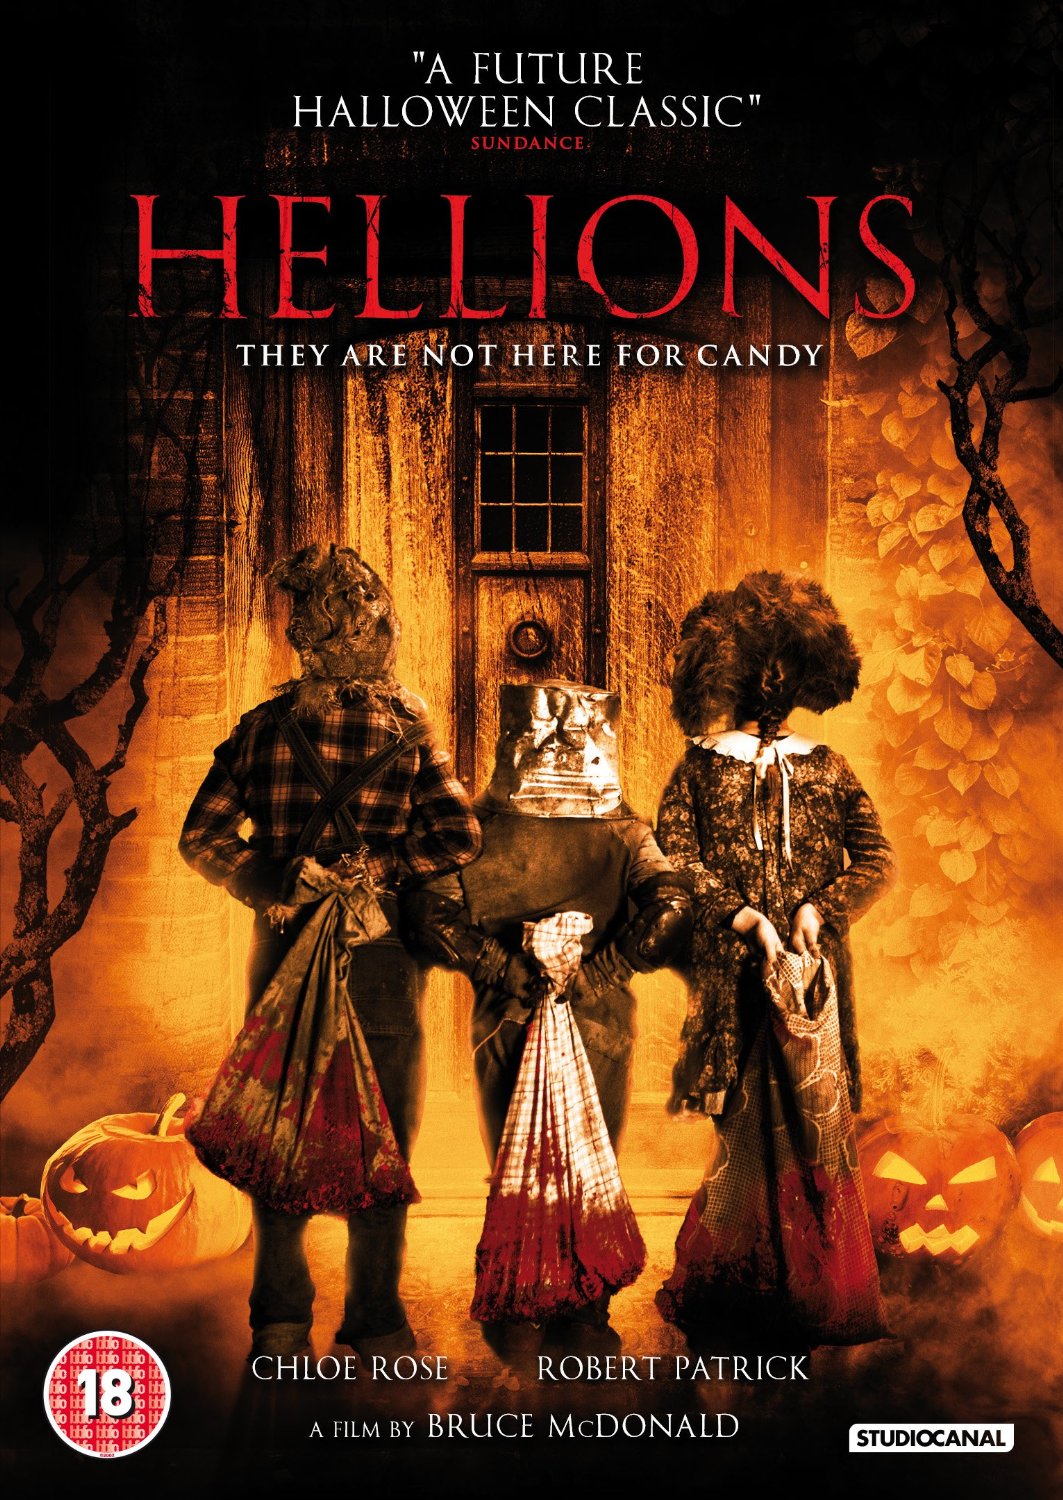 Hellions DVD review: A beautifully creepy Halloween horror